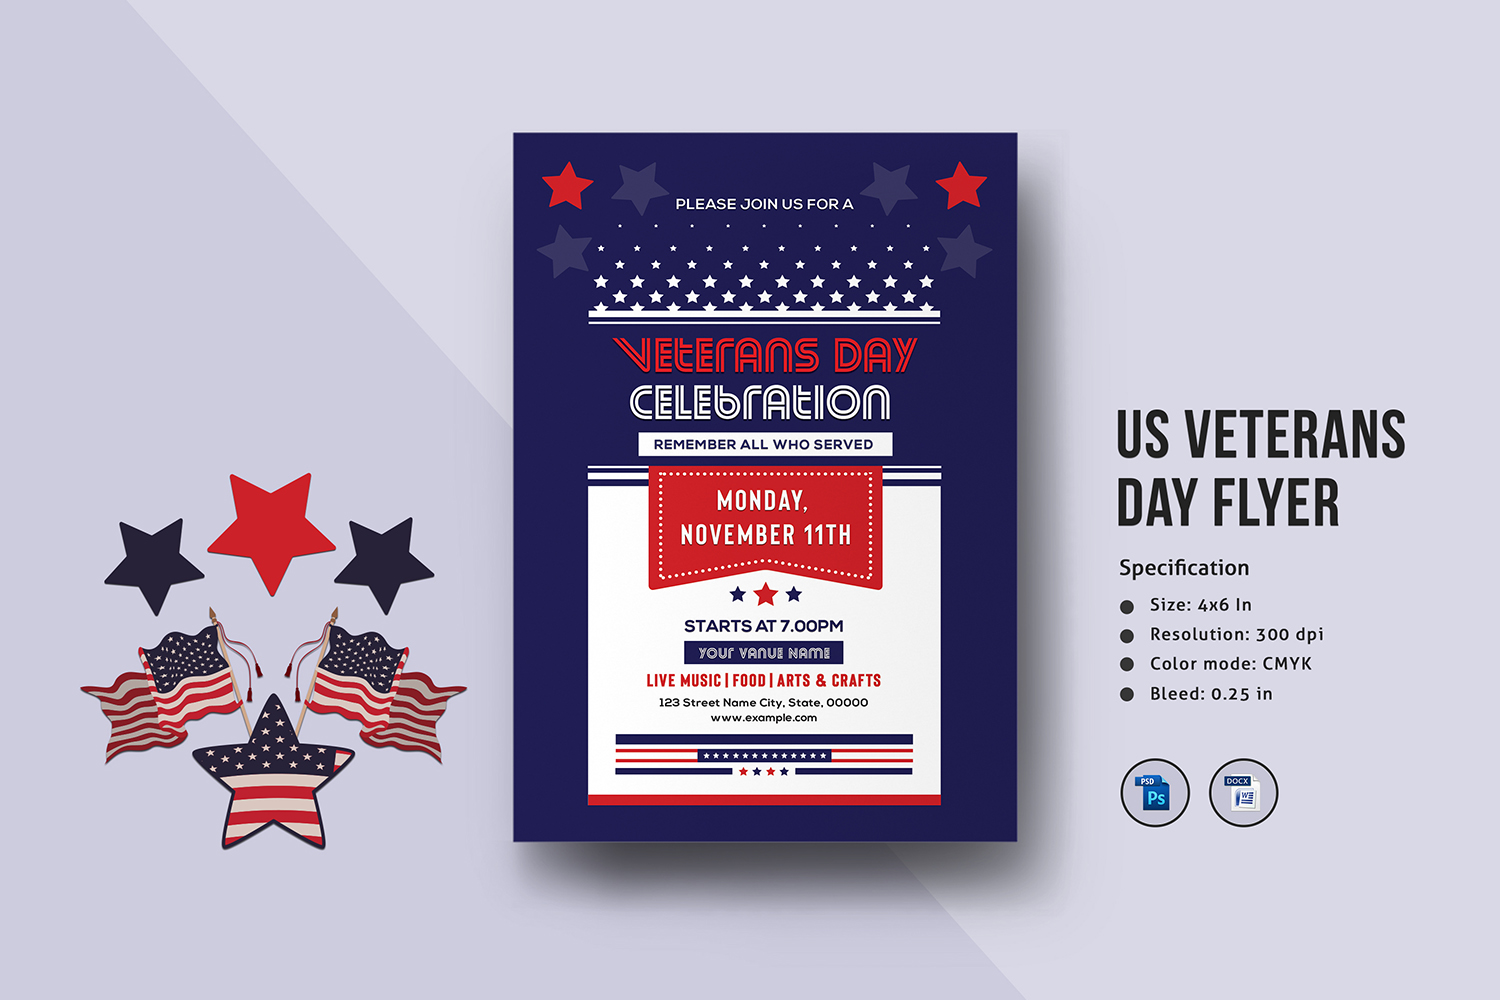 US Veterans Day Flyer Template